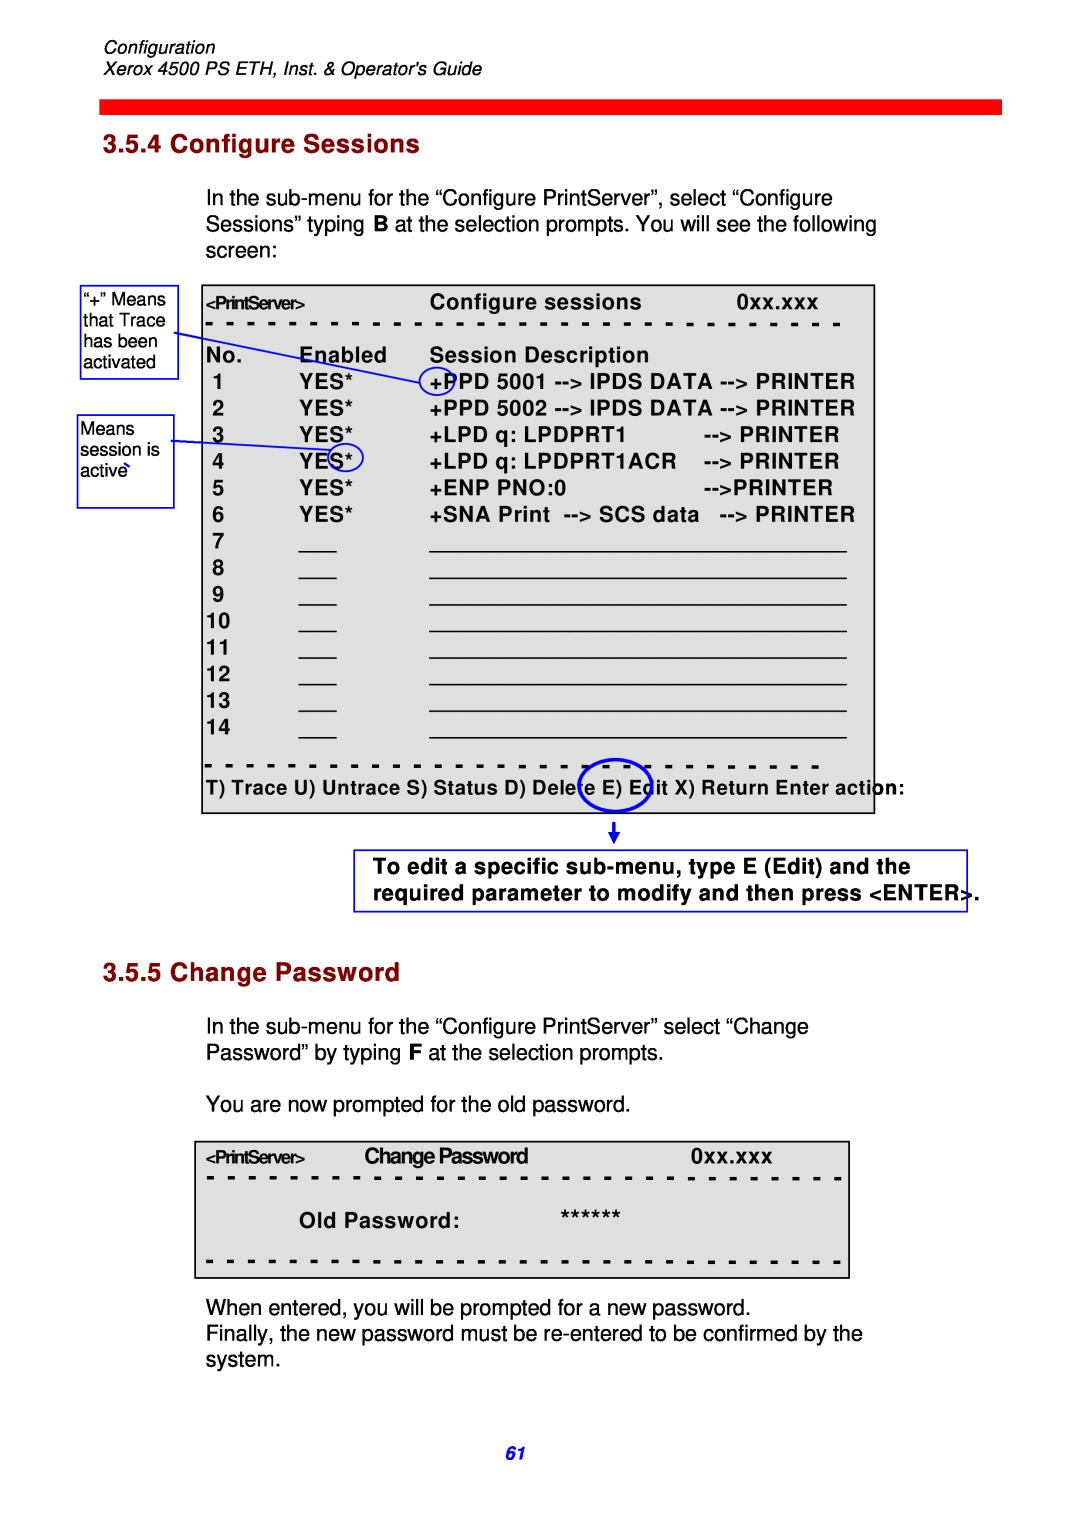 Xerox 4500 ps eth Configure Sessions, Change Password, Configure sessions, Enabled, Session Description, +LPD q LPDPRT1 